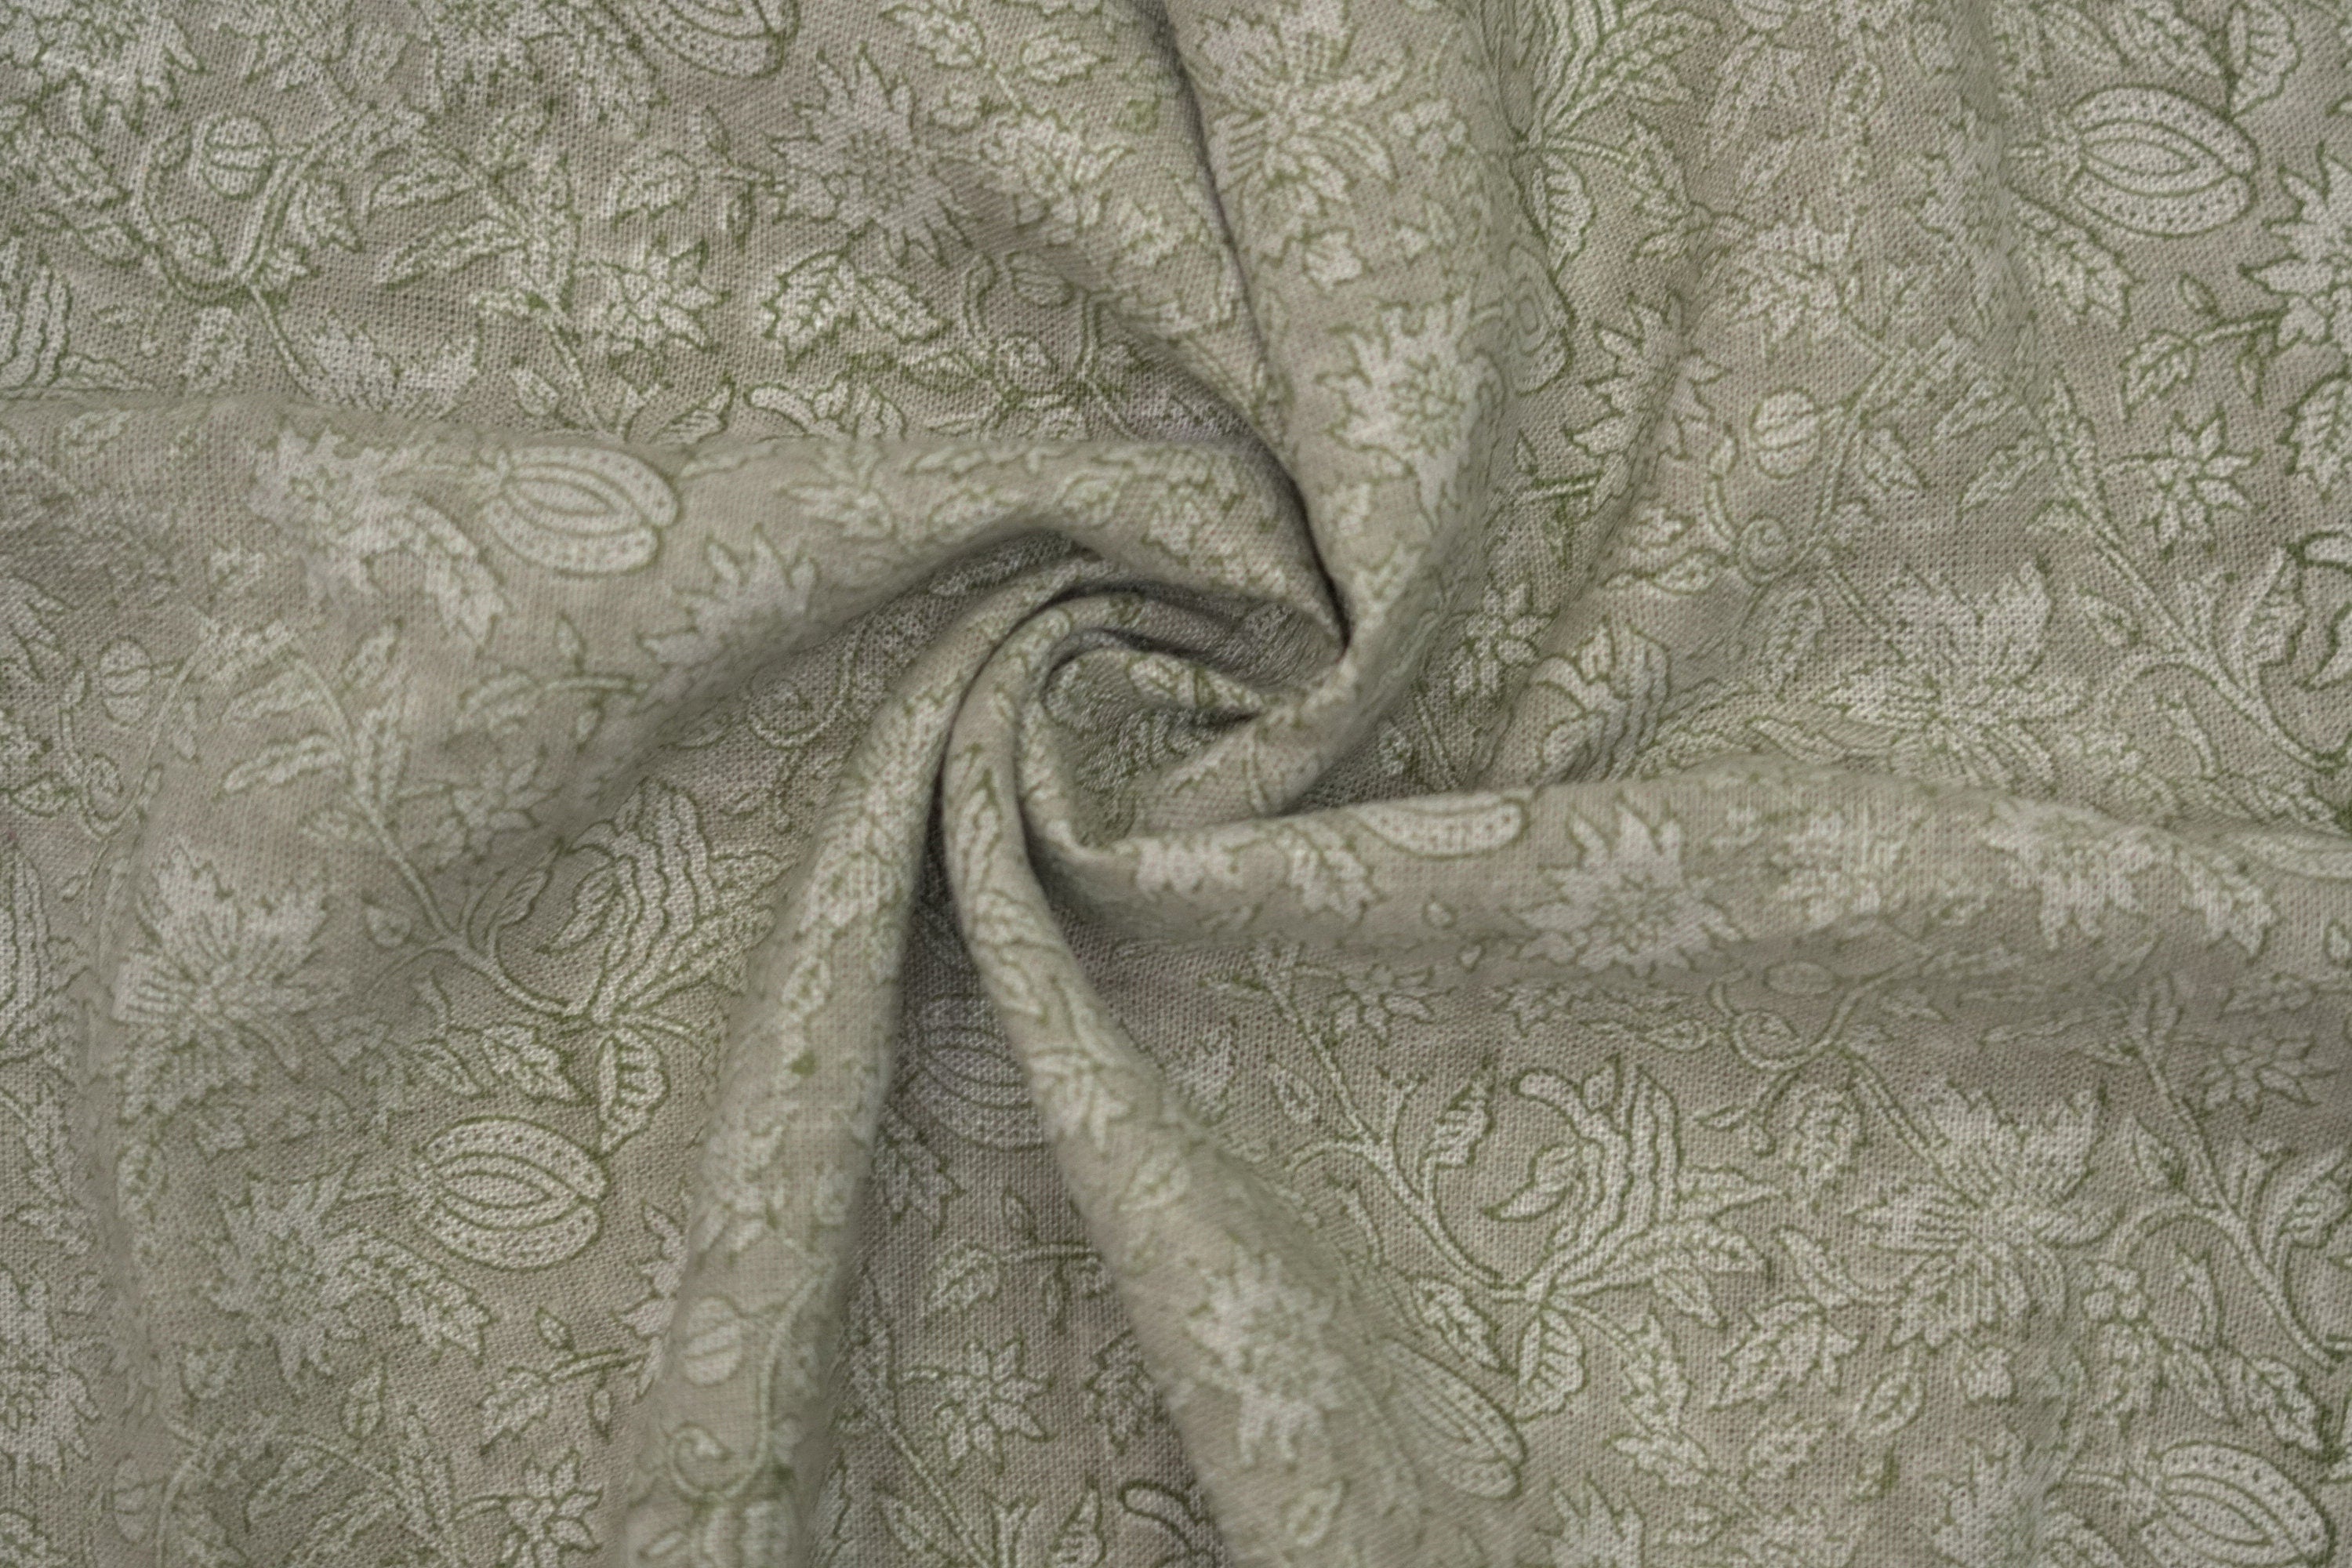 Block Print Linen Fabric, Manikarnika Harit  Natural Green Block Print Linen Fabric  Handmade Indian Handblock Art  Linen & Cotton For Home And Interior Decors